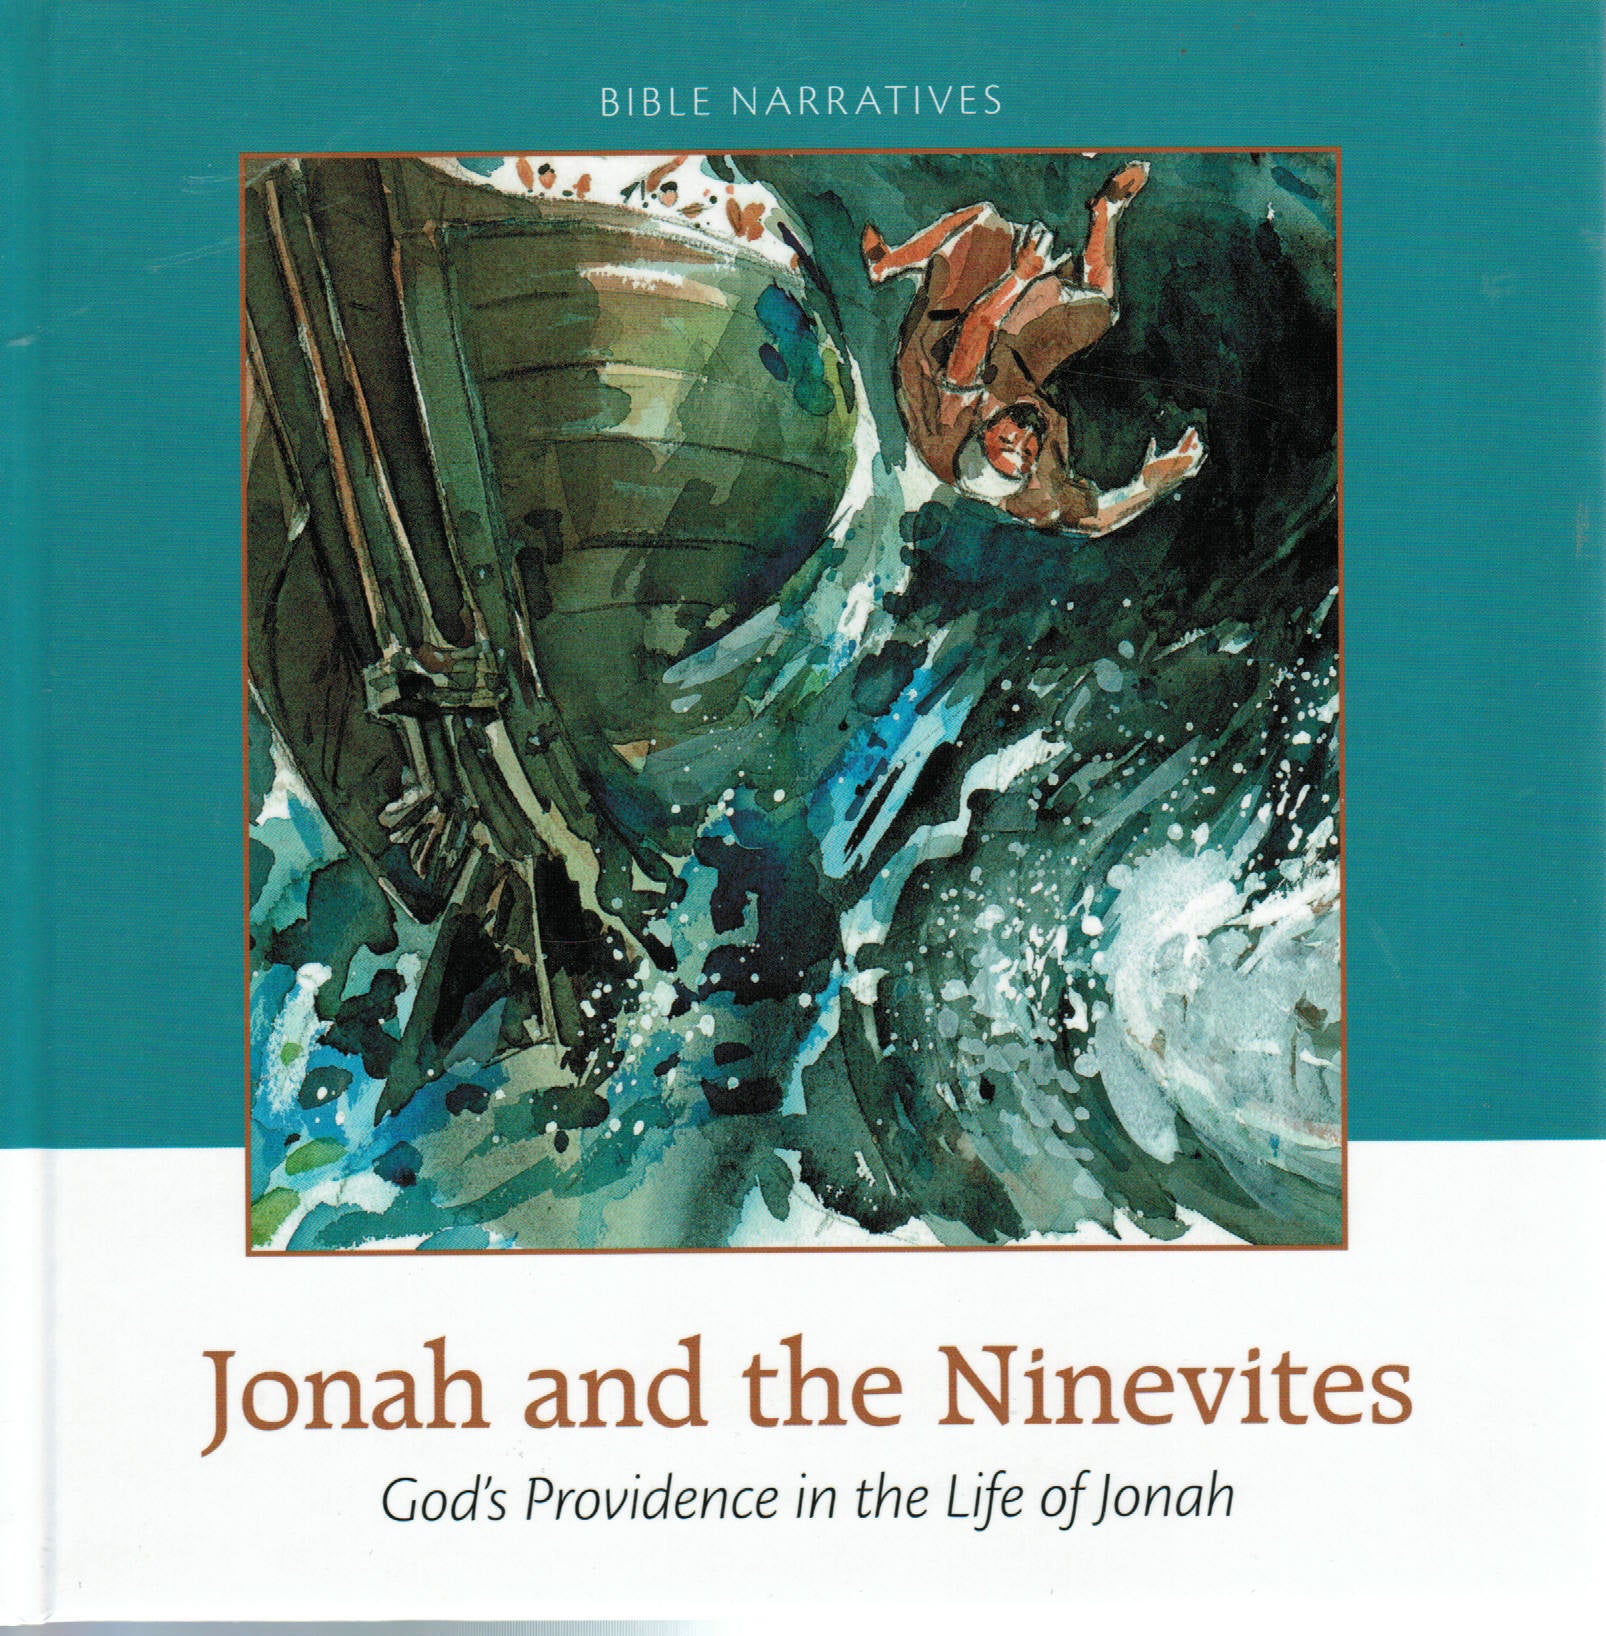 Bible Narratives: Old Testament V20 - Jonah and the Ninevites: God's Providence in the Life of Jonah